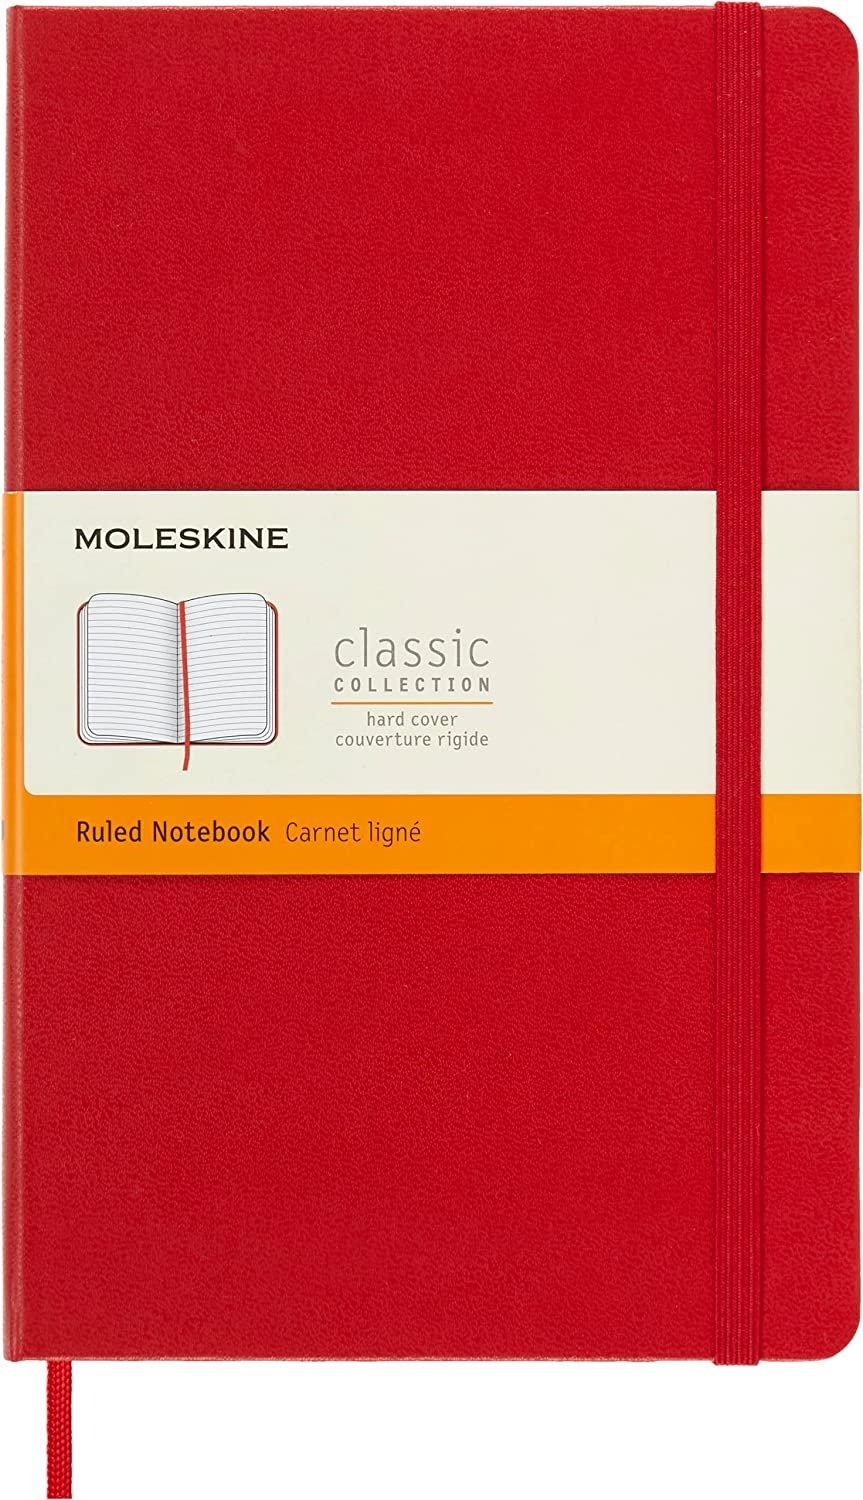 Moleskine notebook